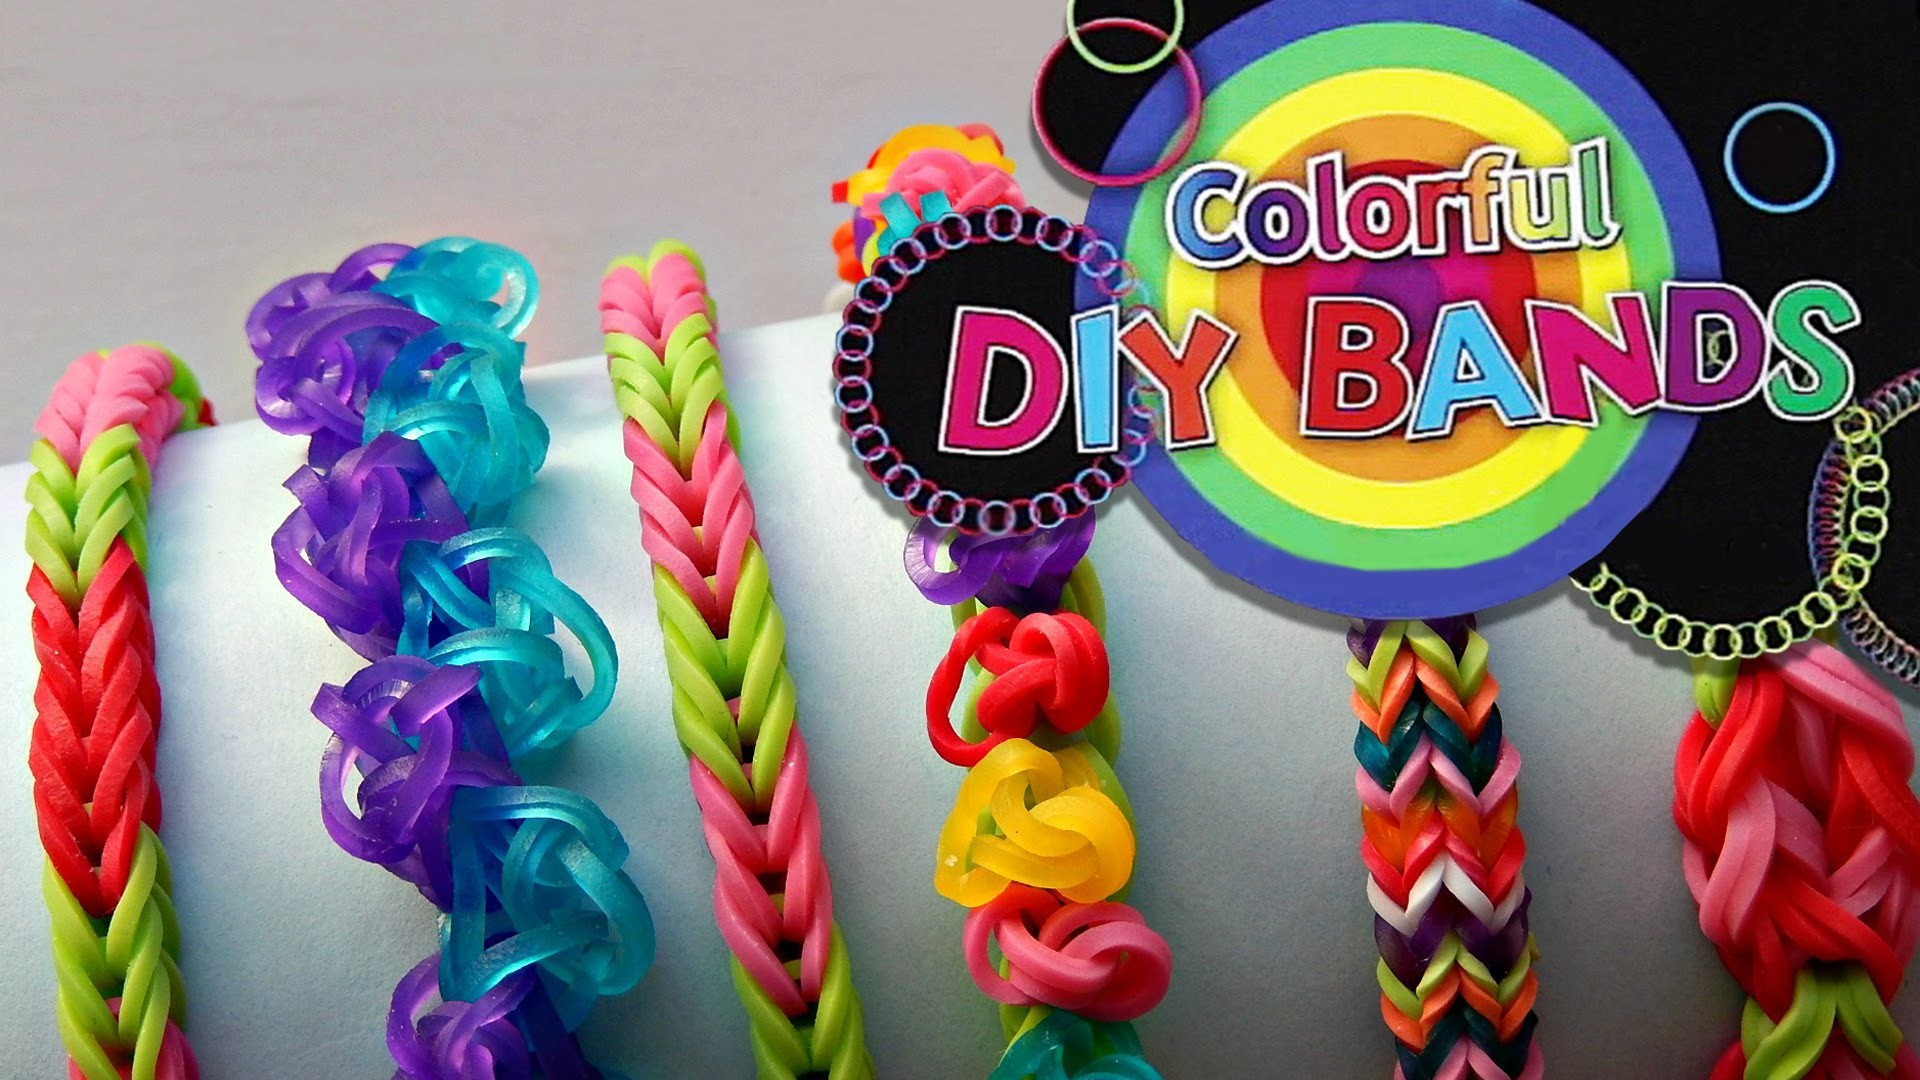 Colorful Diy Bands, Gumki do robienia biżuterii